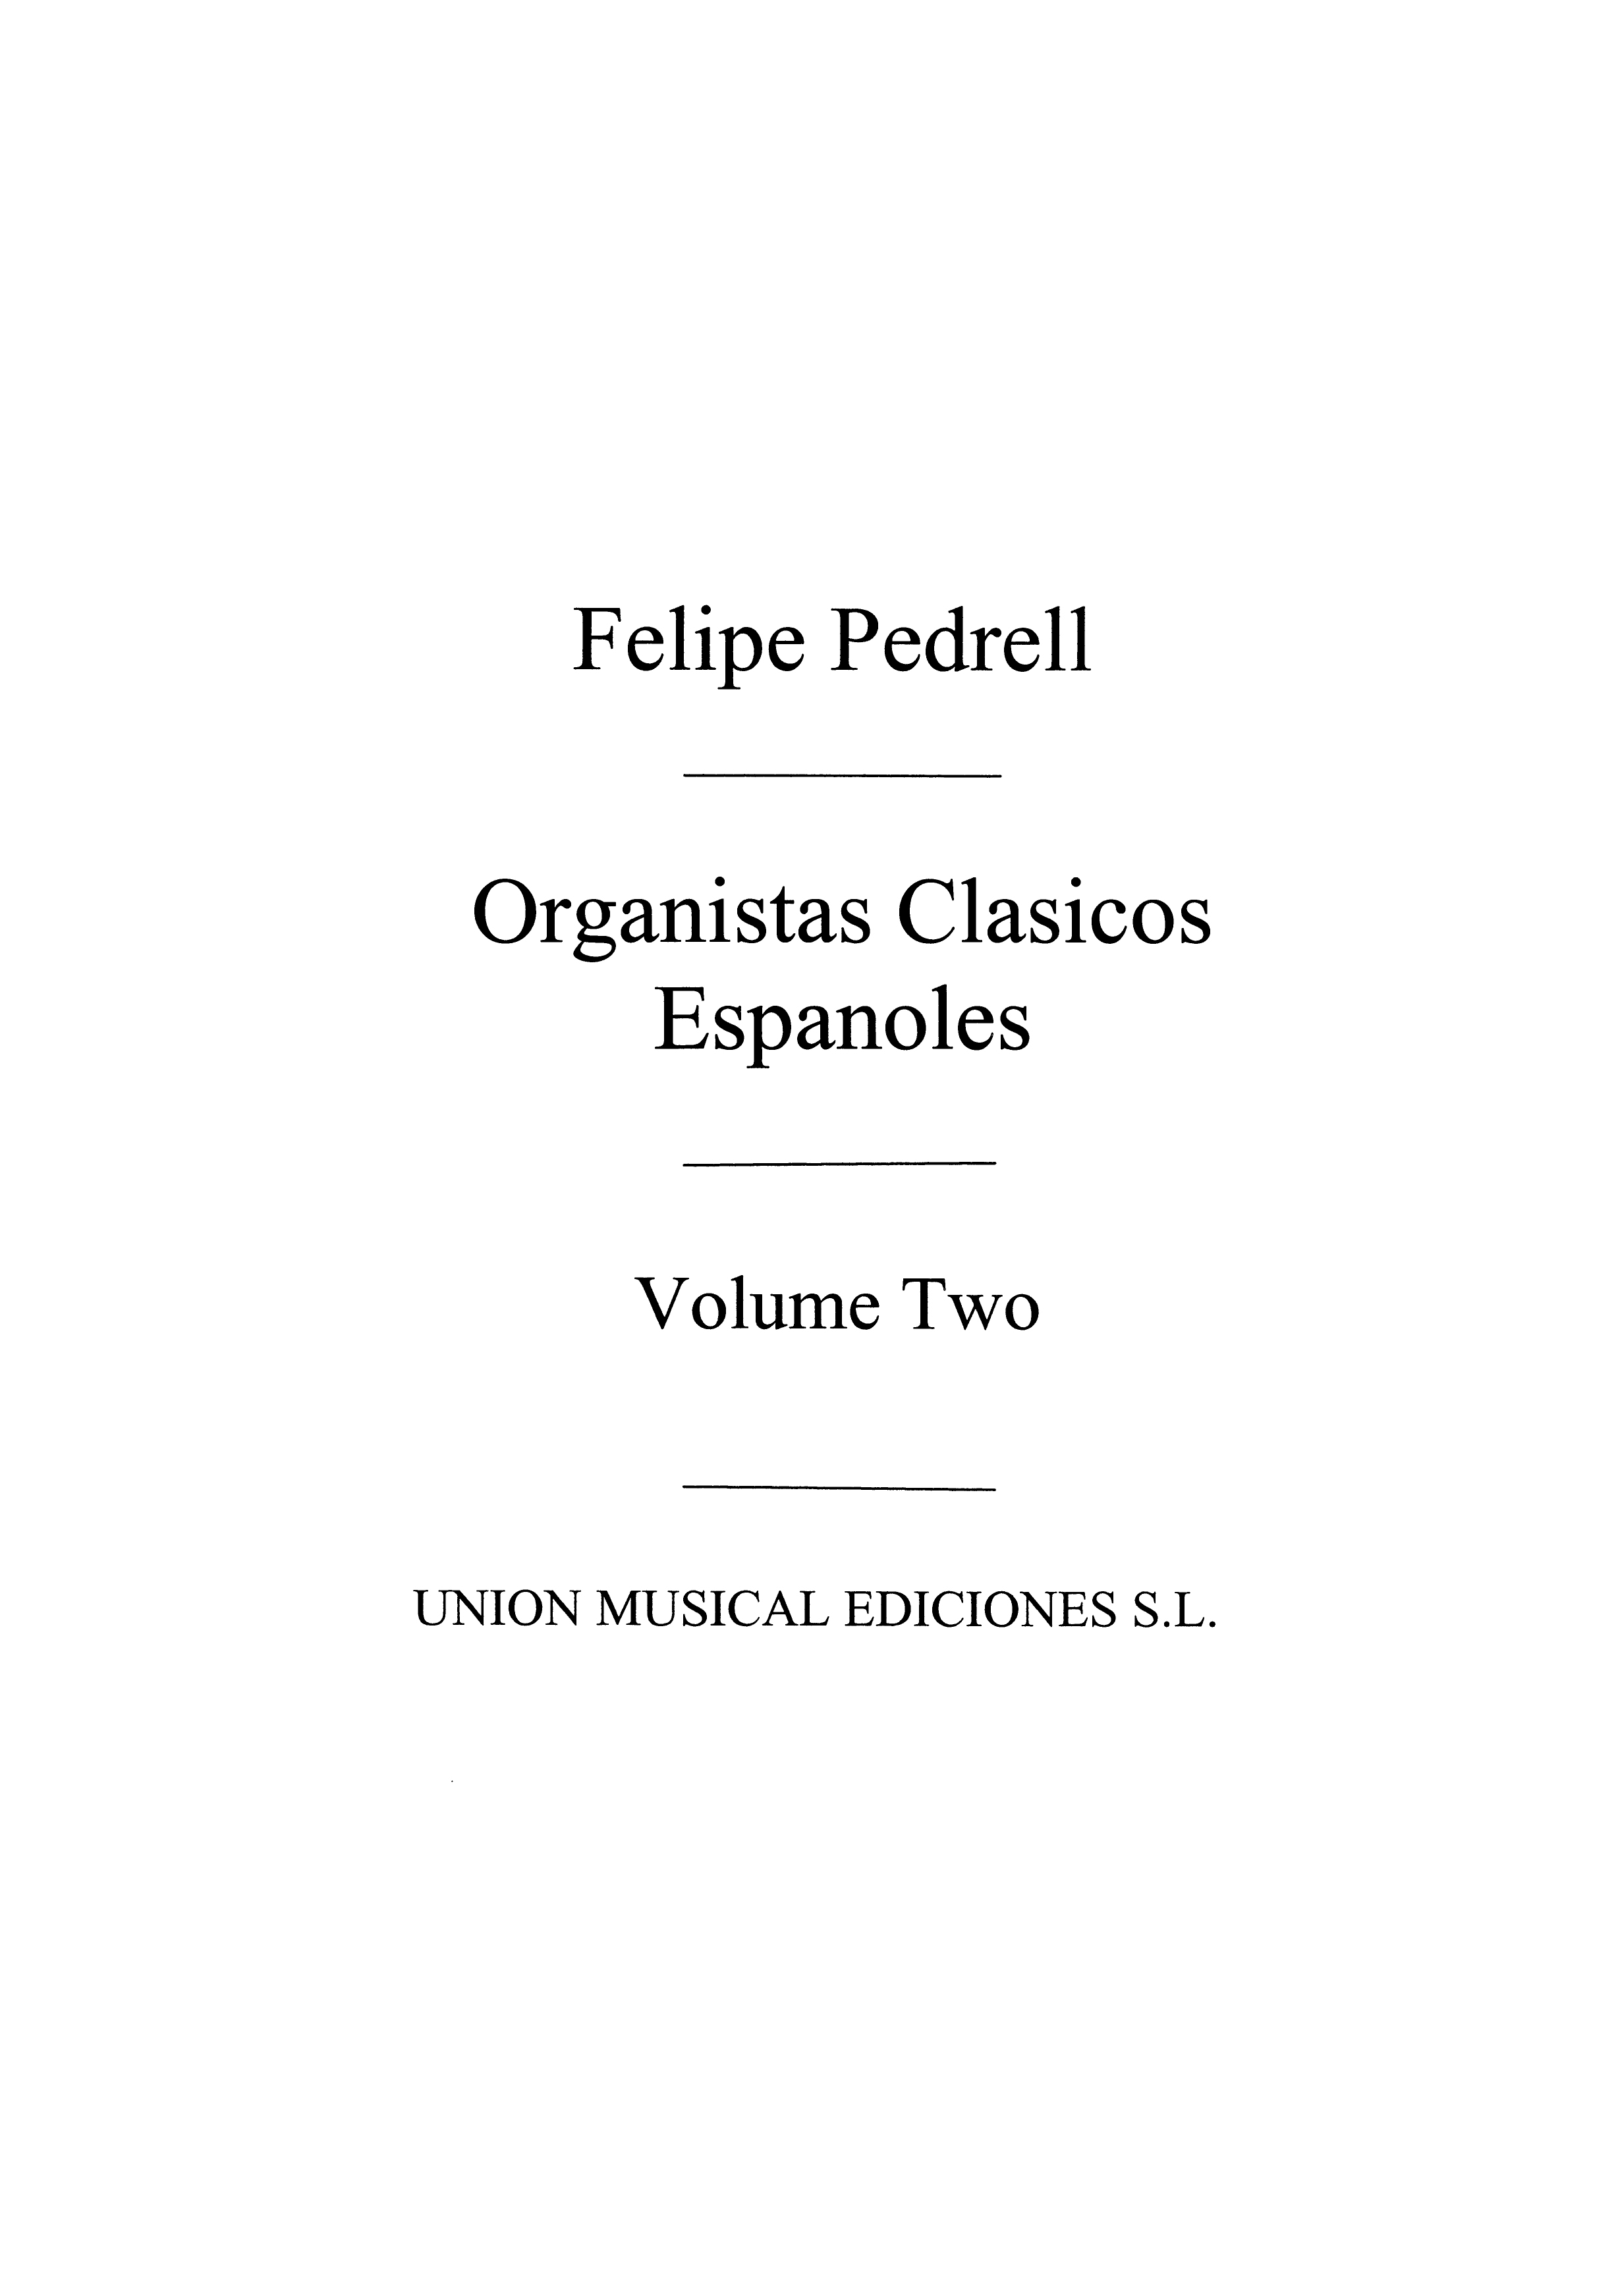 Felipe Pedrell: Antologia De Organistas Clasicos Vol.2: Organ: Instrumental Work